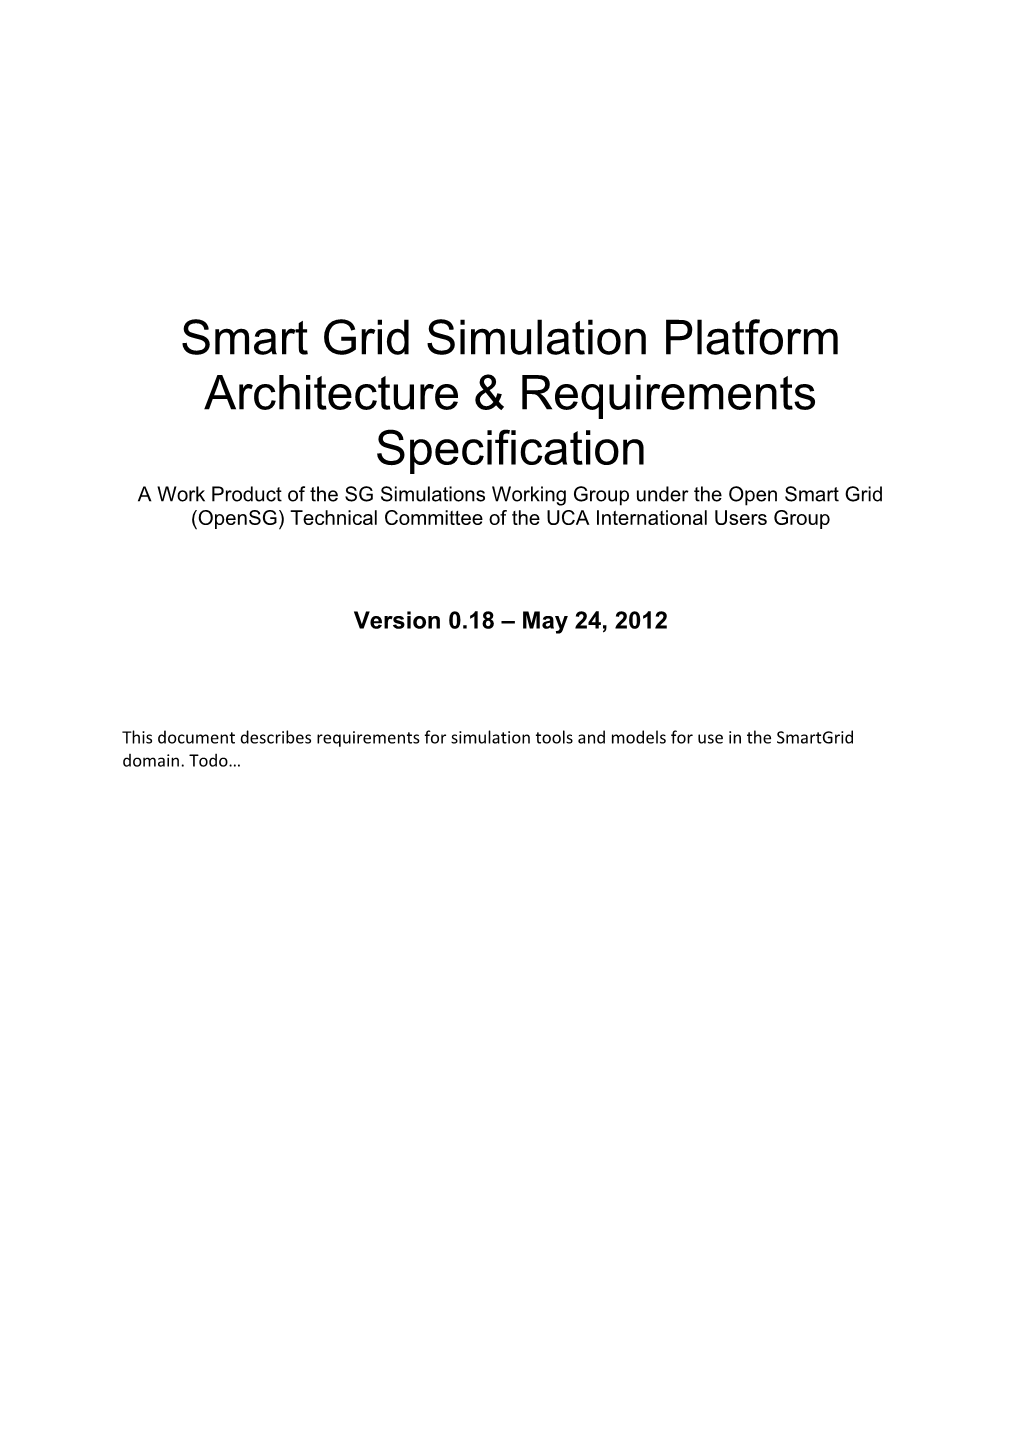 Smart Grid Simulation Platform Architecture & Requirements Specification s1